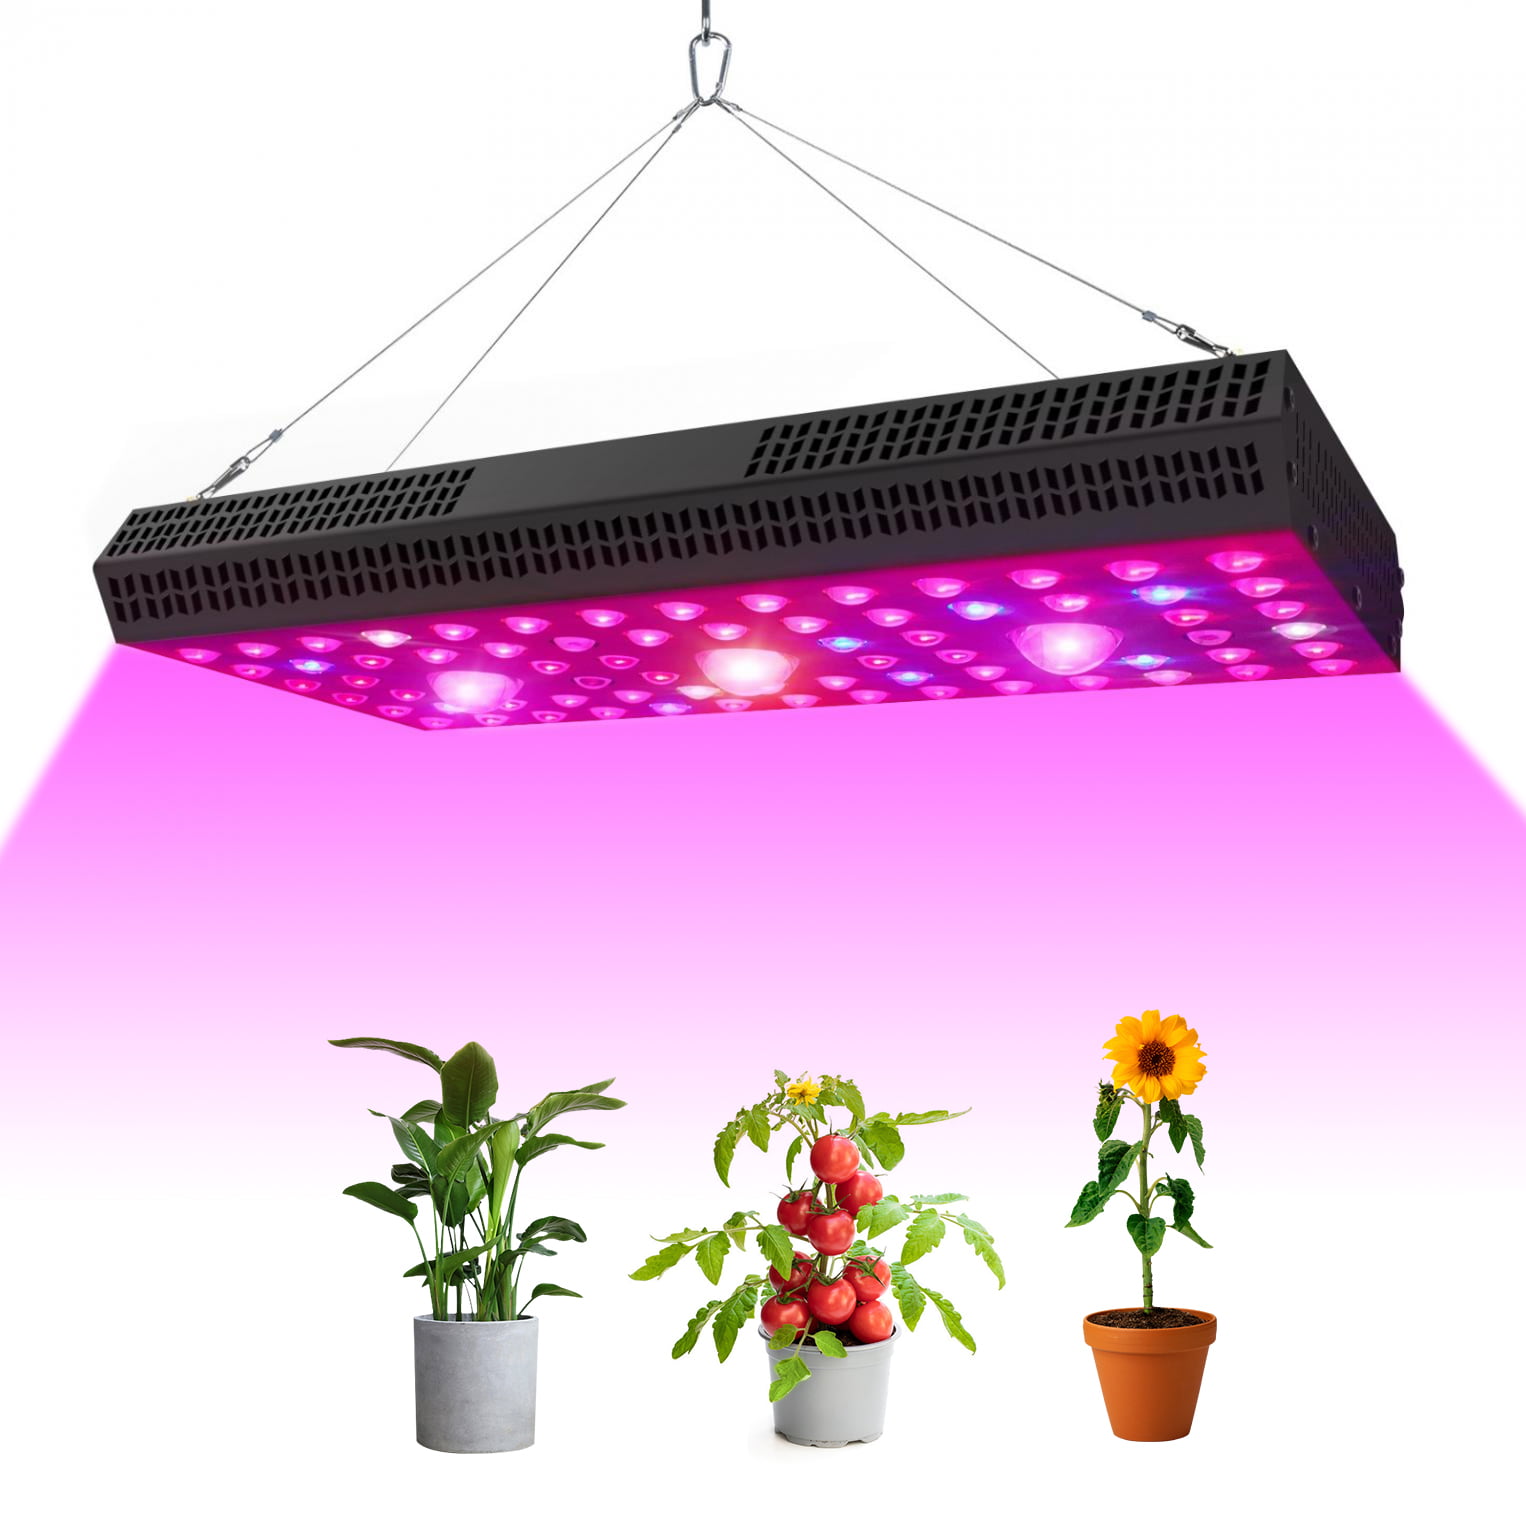 4× 300W Watt COB Led Grow Light Full Spectrum Lamp Plants Hydroponic Veg Flower 